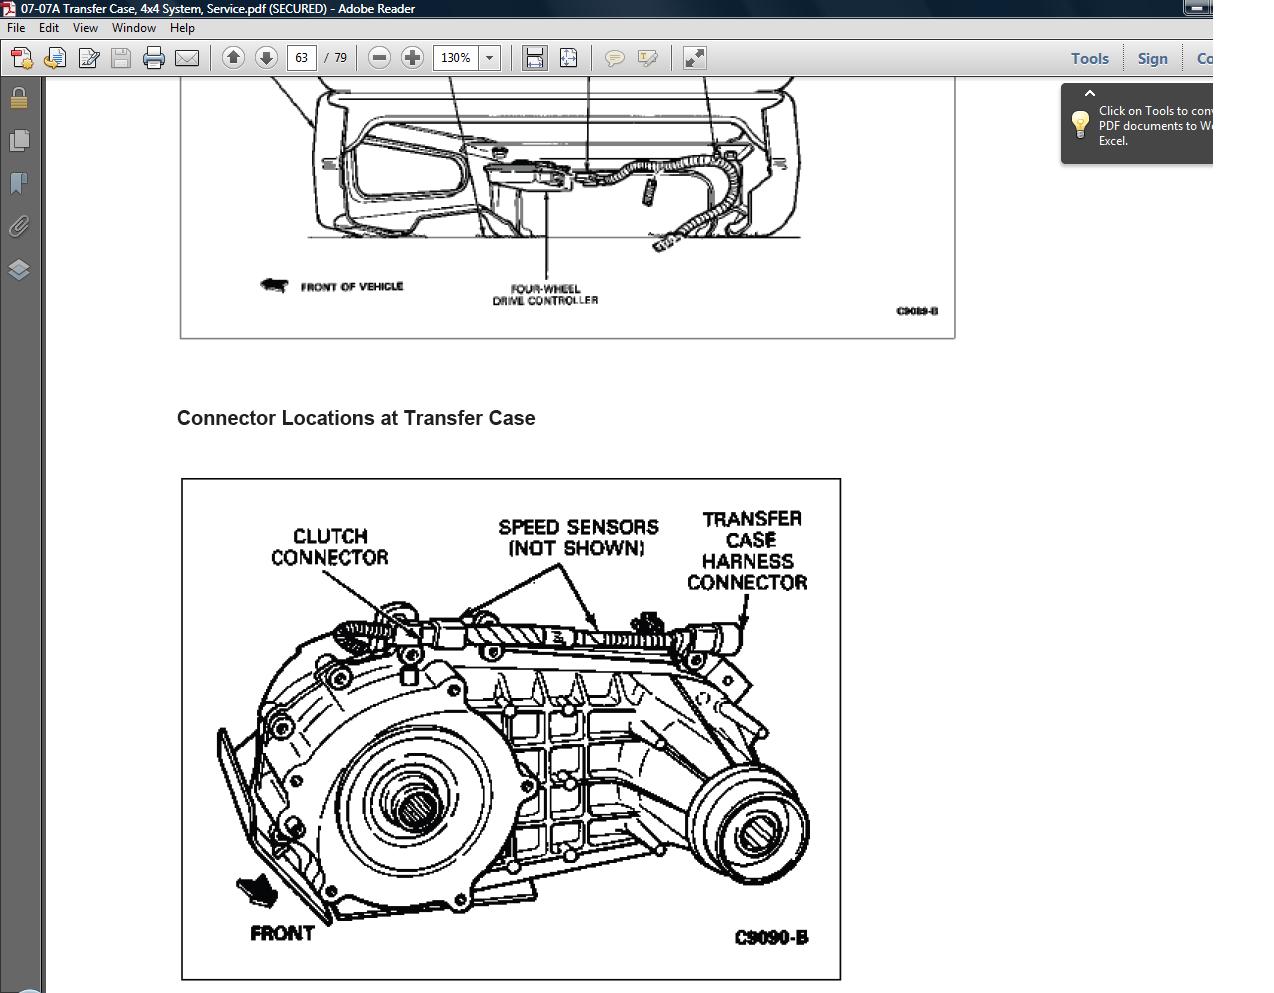 2005 Ford ranger manual transmission problems #9